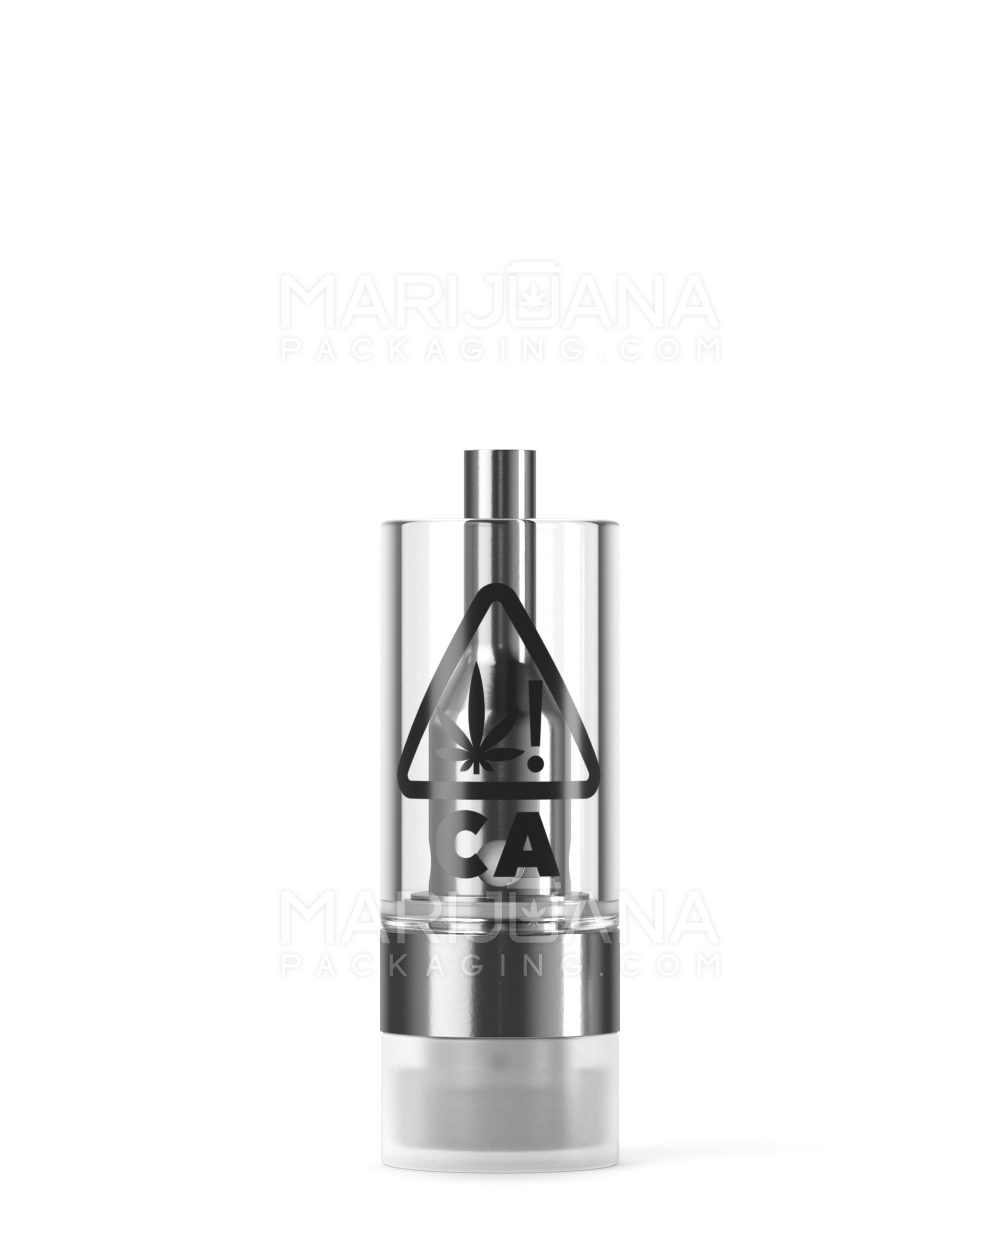 RAE California Universal Symbol | Ceramic Core Glass Vape Cartridge w/ 2mm Aperture | 0.5mL - Arbor Press - 400 Count - 6